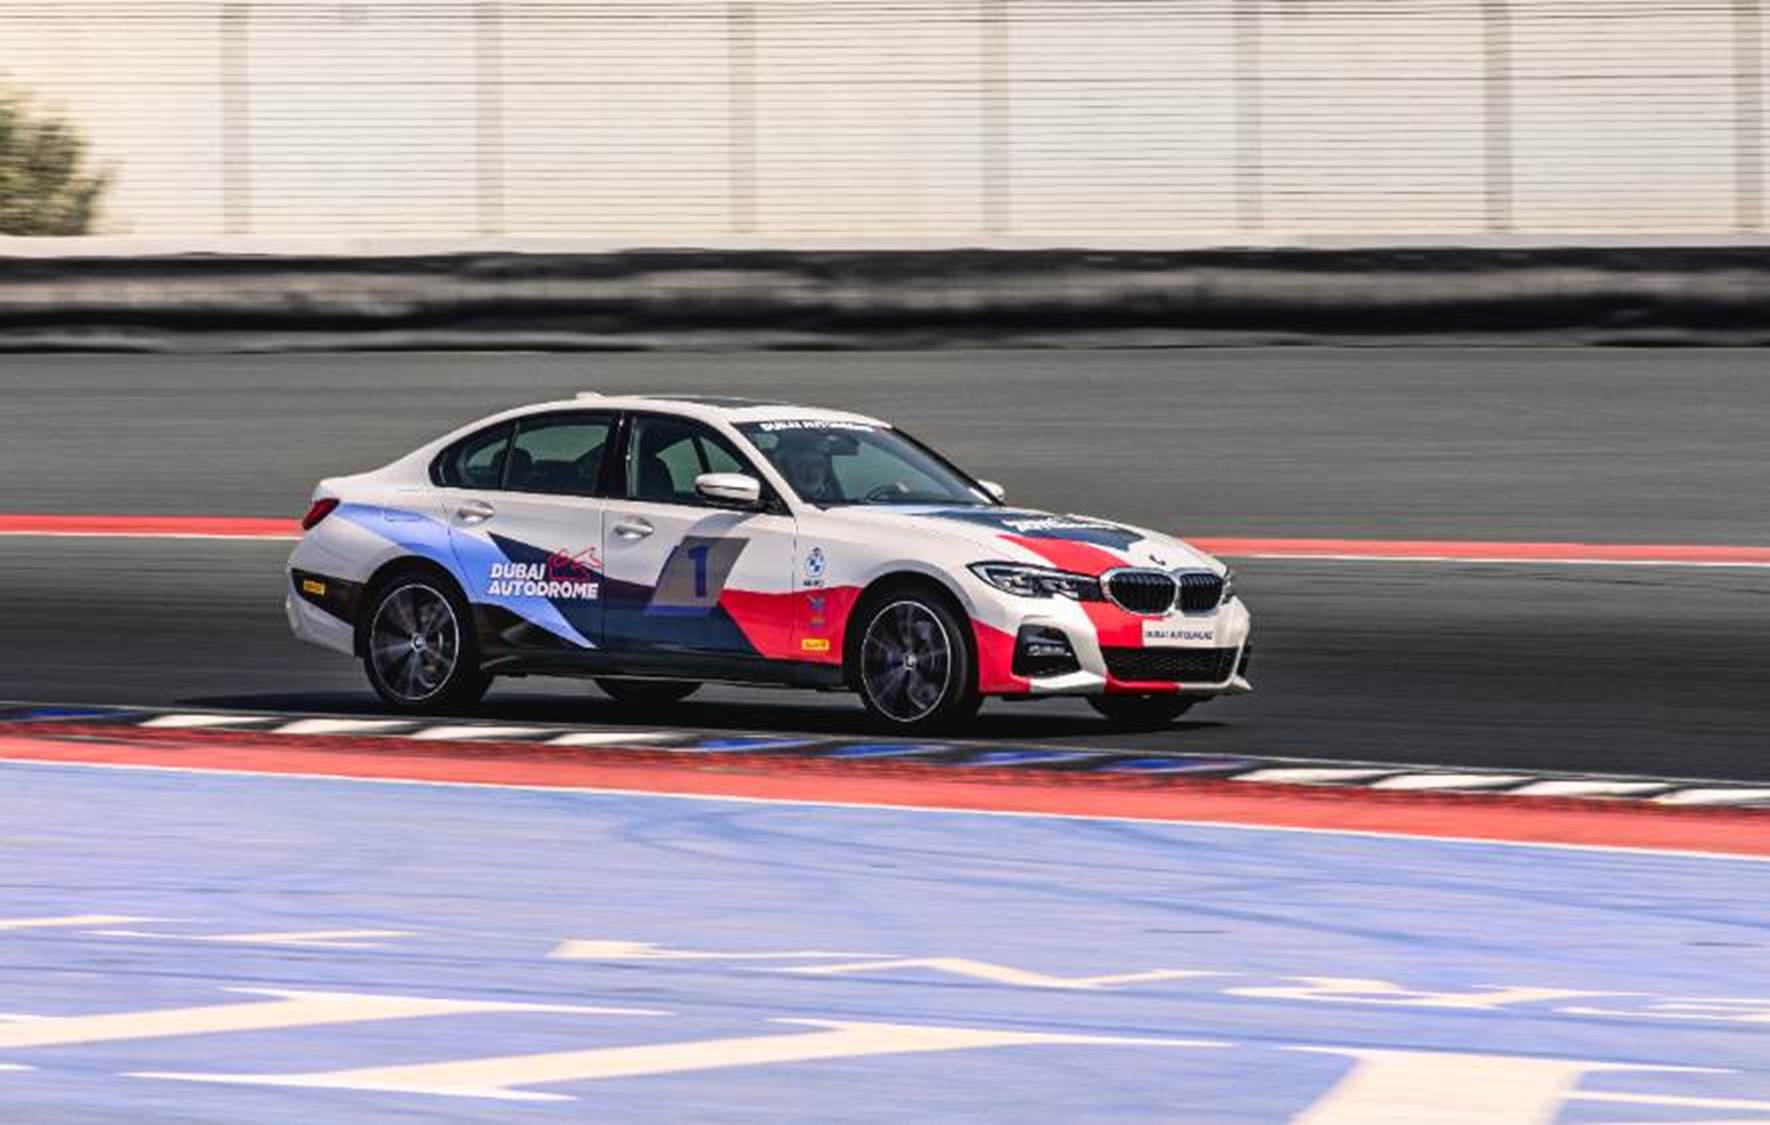 BMW AGMC launches the BMW M Experience at Dubai Autodrome